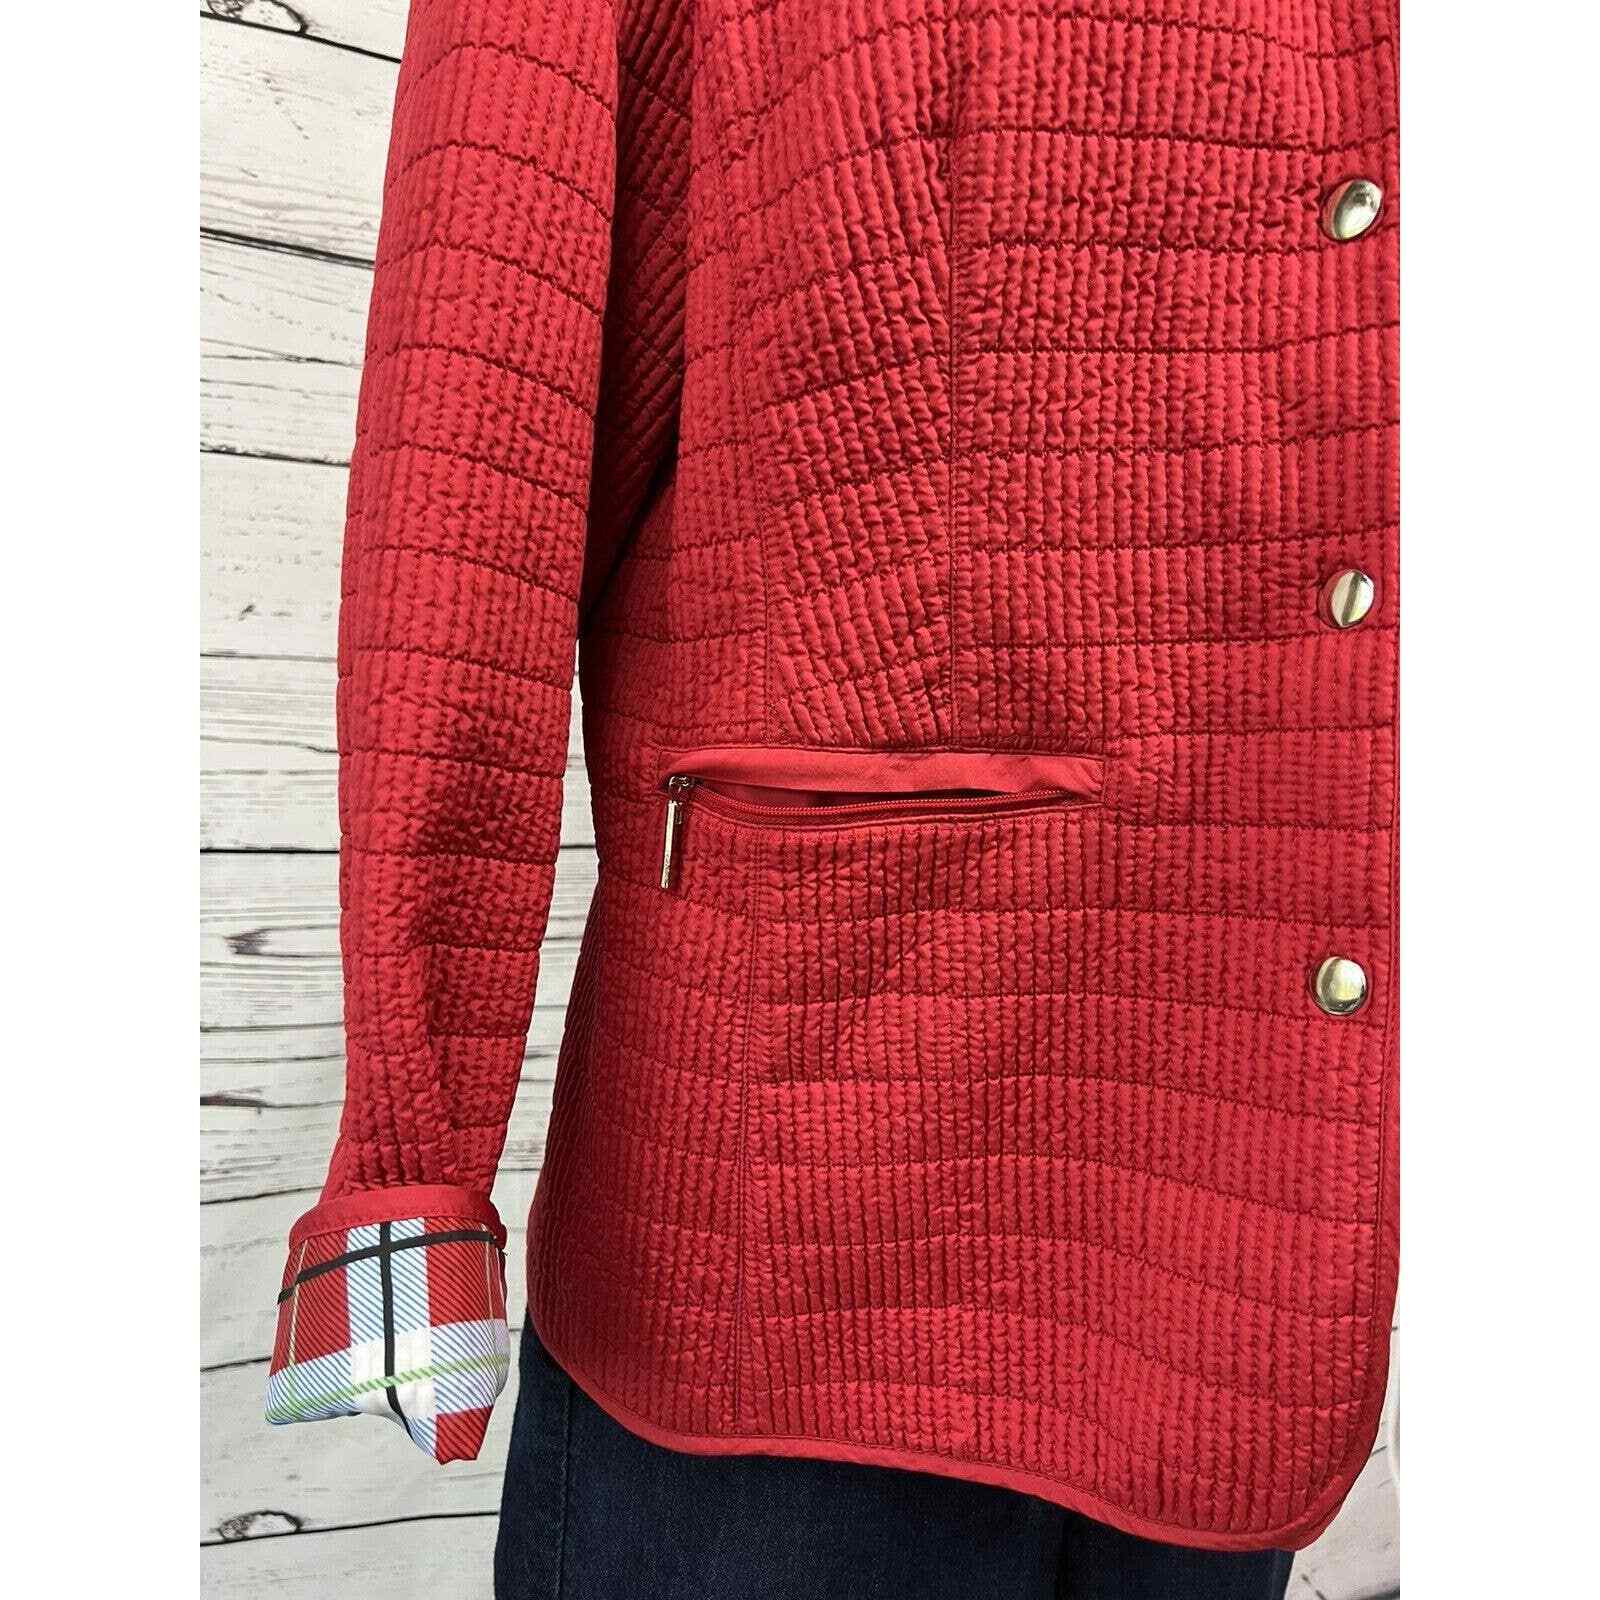 Pendleton Coat Women’s Medium Button Up Coat Red Plaid Lined Lightweight